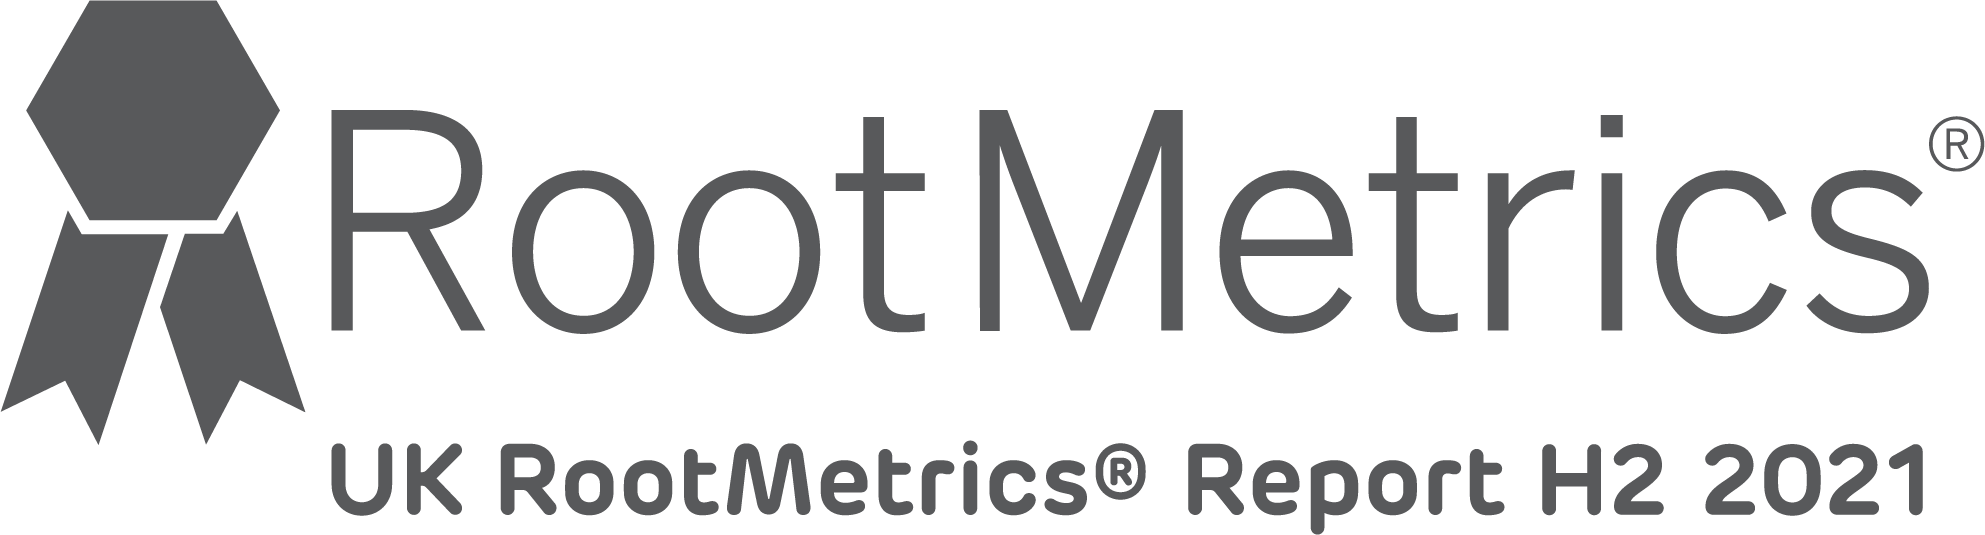 RootMetrics by IHS Markit - UK RootMetrics Report H2 2021